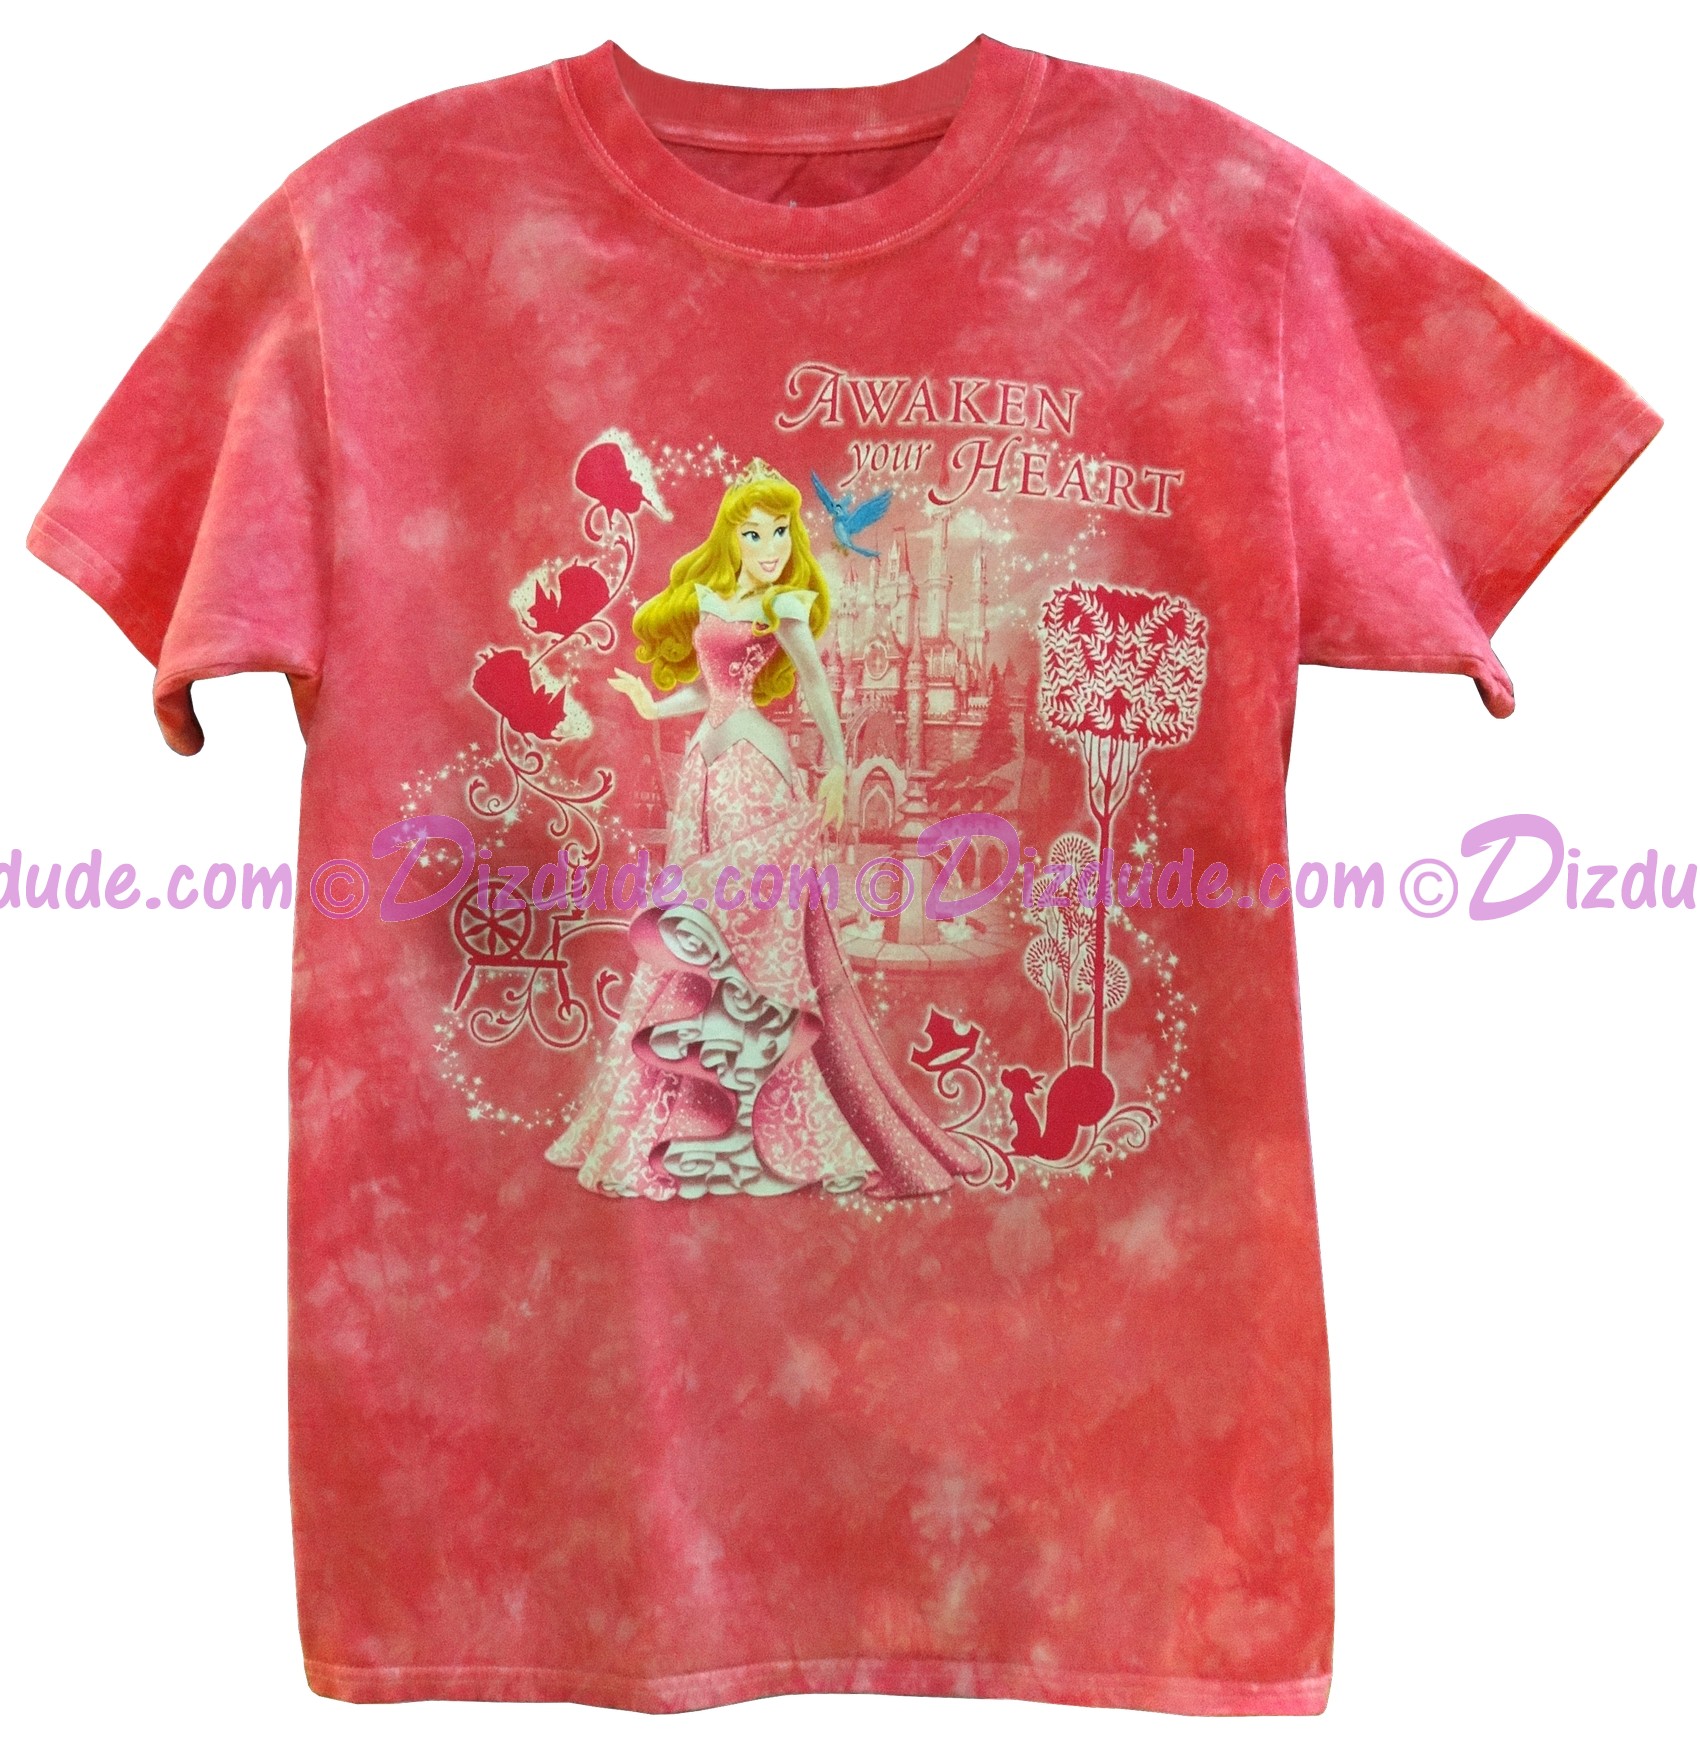 (SOLD OUT) Disney Princess Aurora "AWAKEN your HEART" Ladies T-shirt (Tee, Tshirt or T shirt)